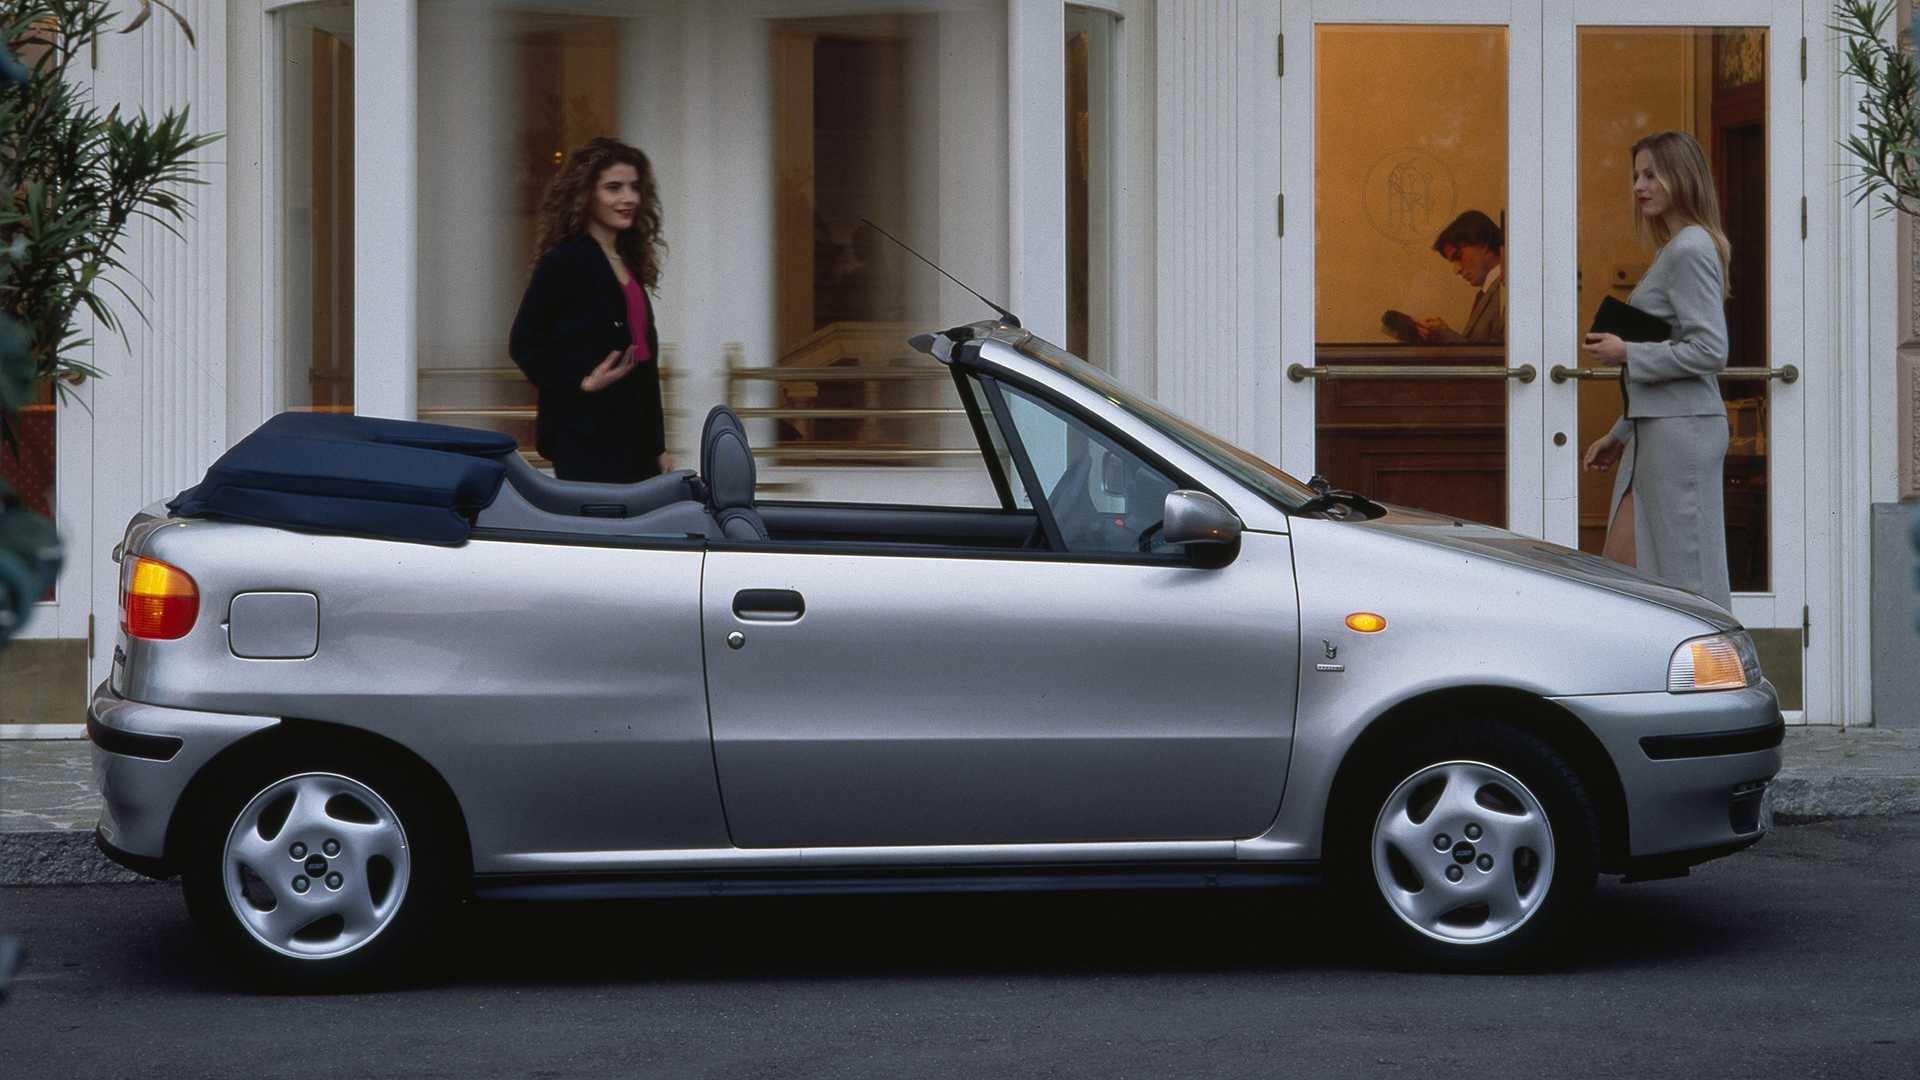 Fiat Punto Cabriolet Specs Photos Videos And More On Topworldauto